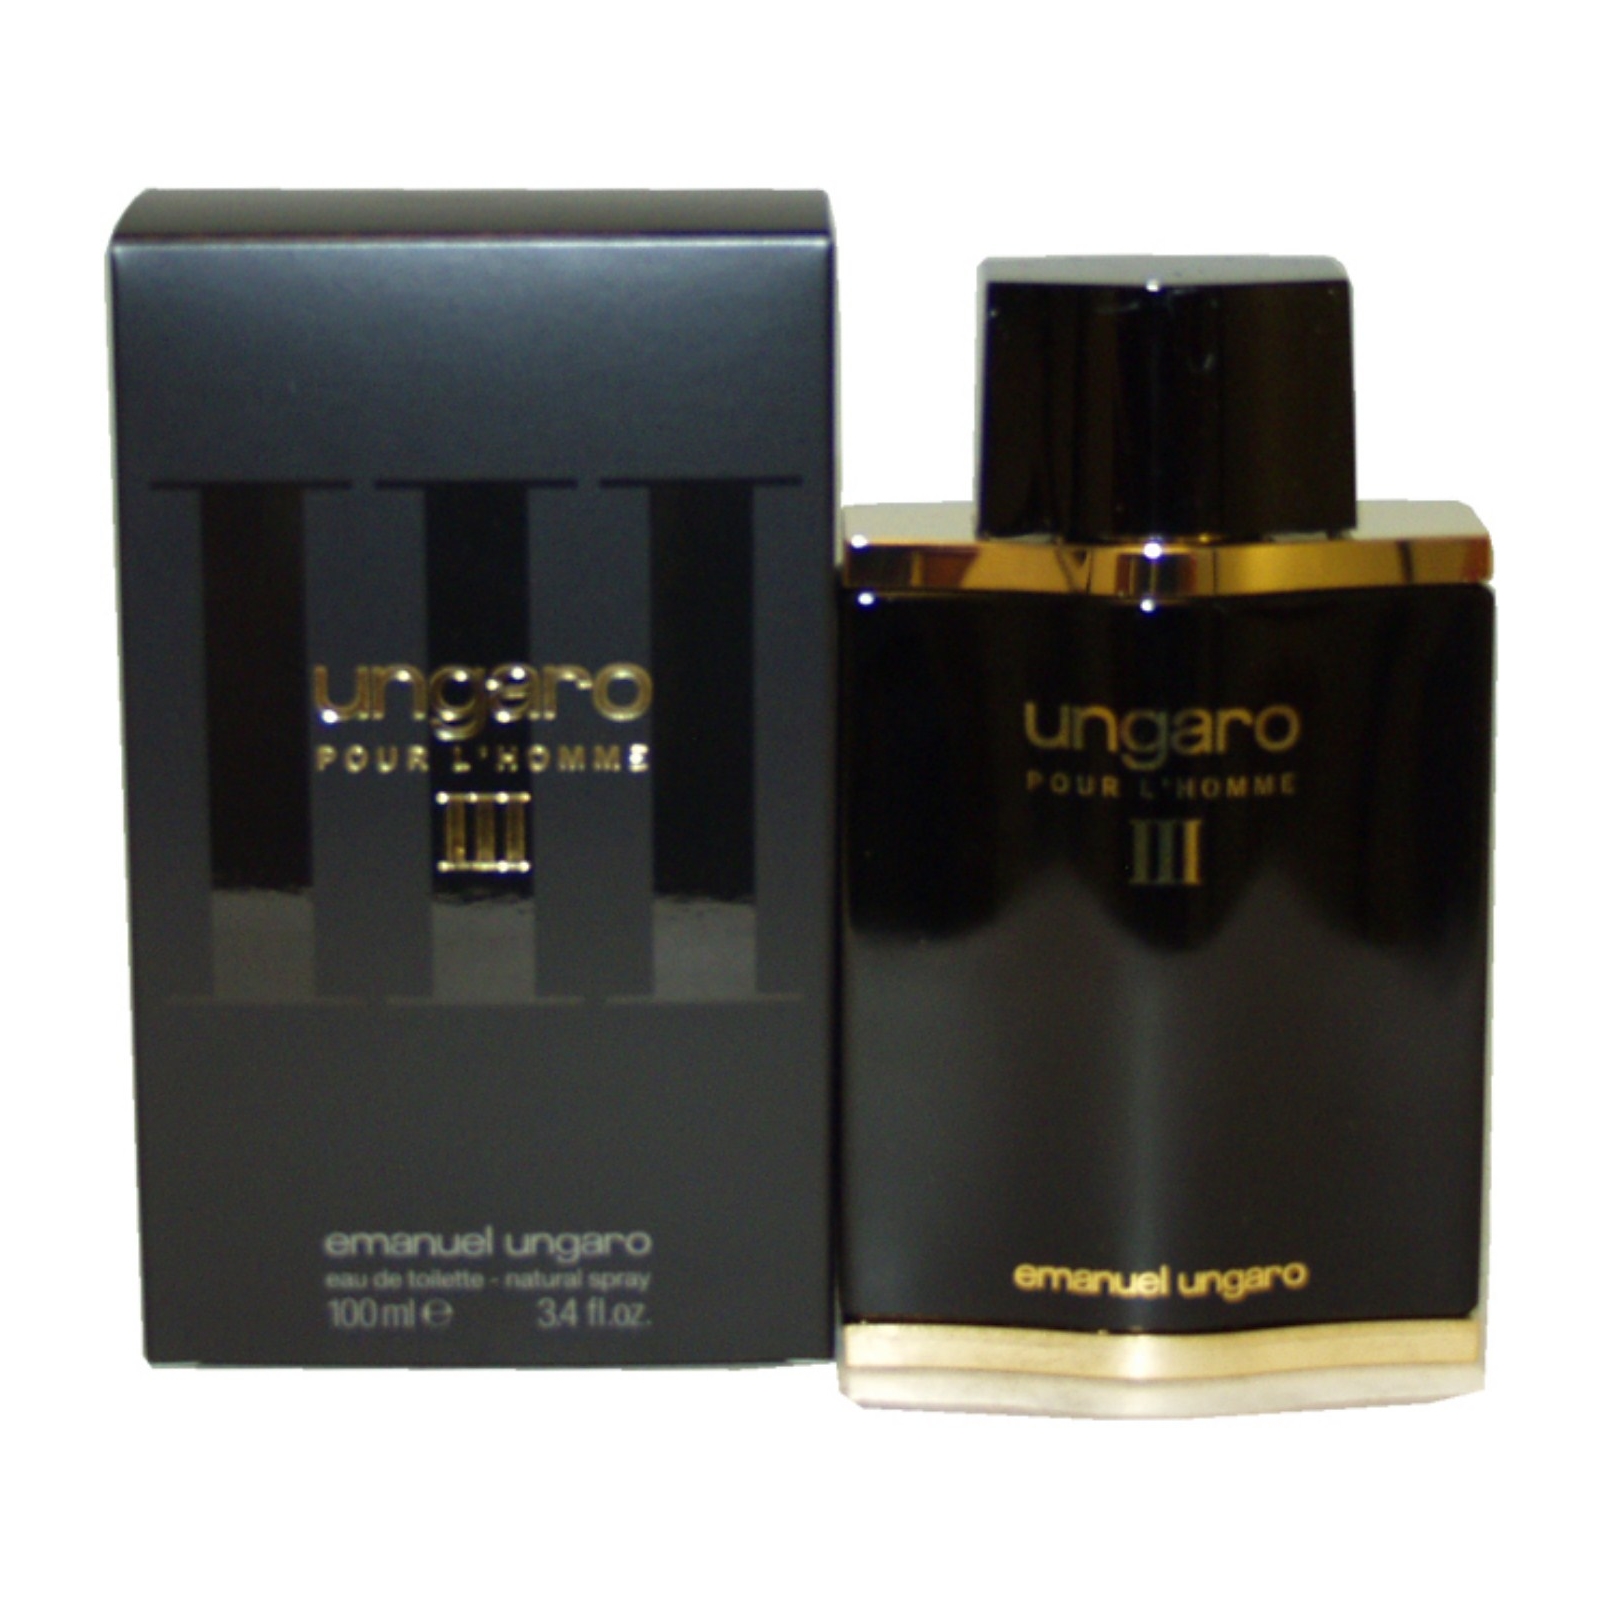 Emanuel Ungaro Ungaro III by  for Men - 3.4 oz EDT Spray